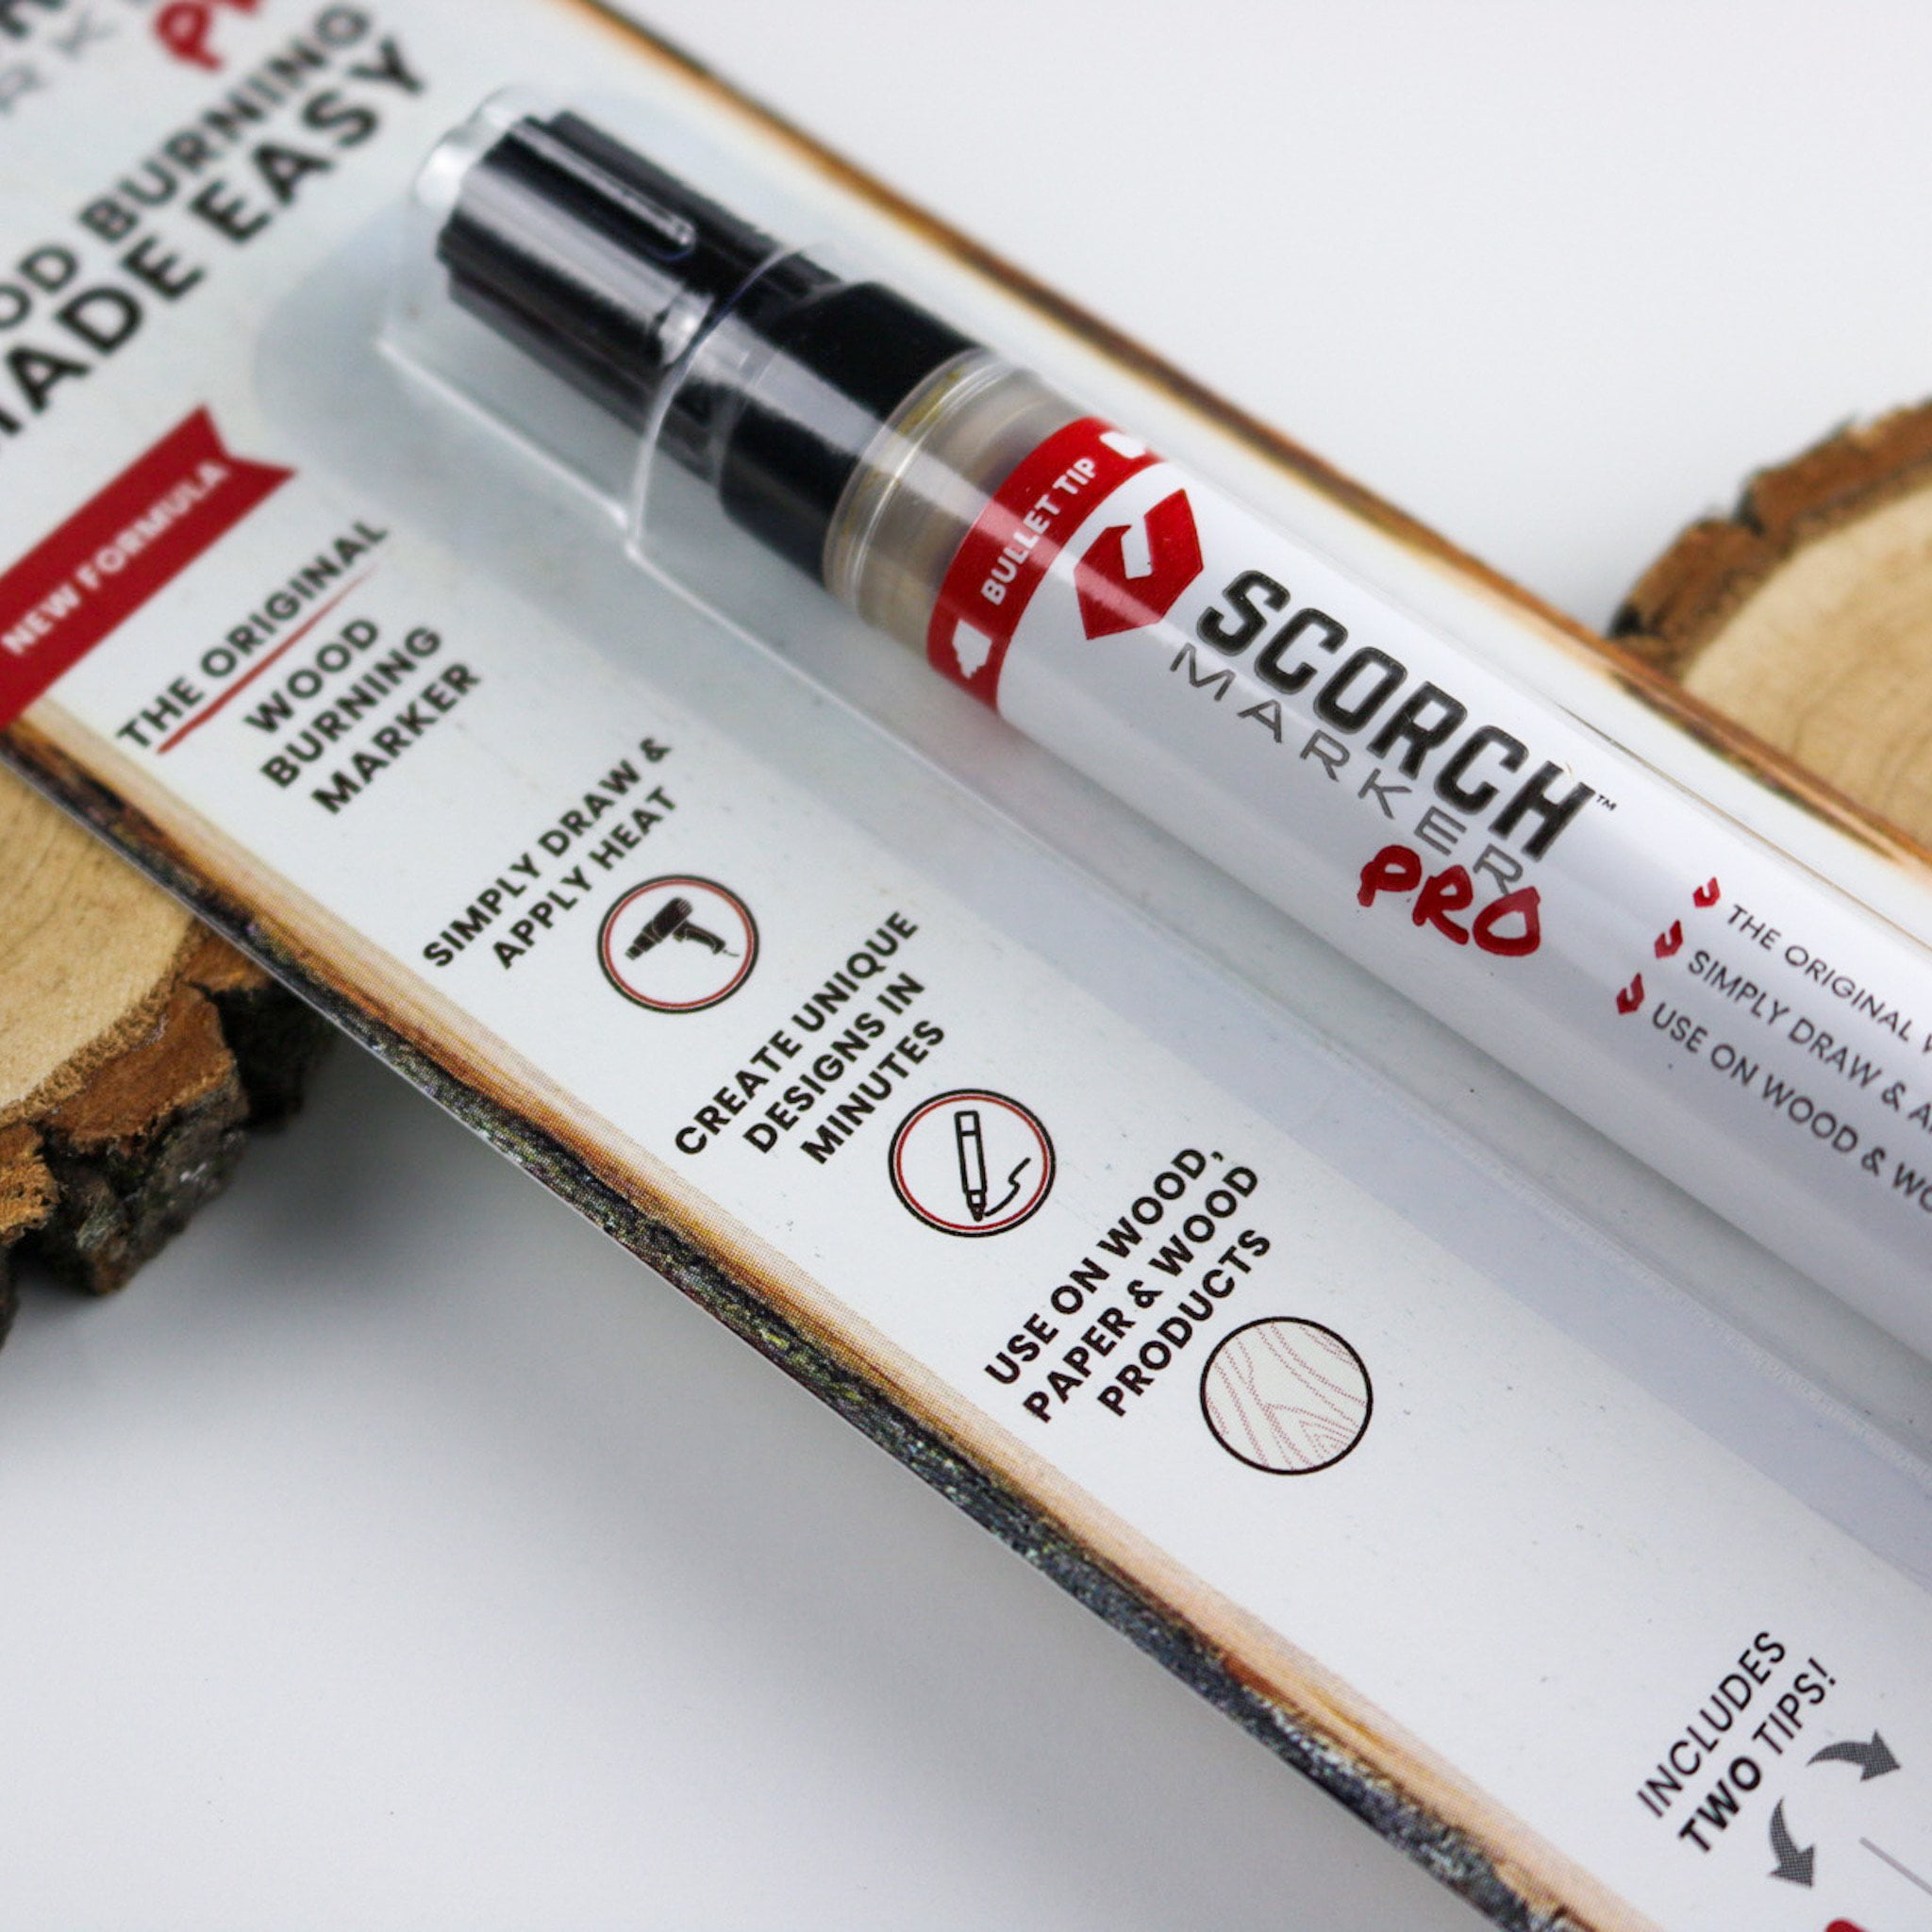 Scorch Marker High-Density Scorch Pen For Wood Burning 3 Pcs Wood